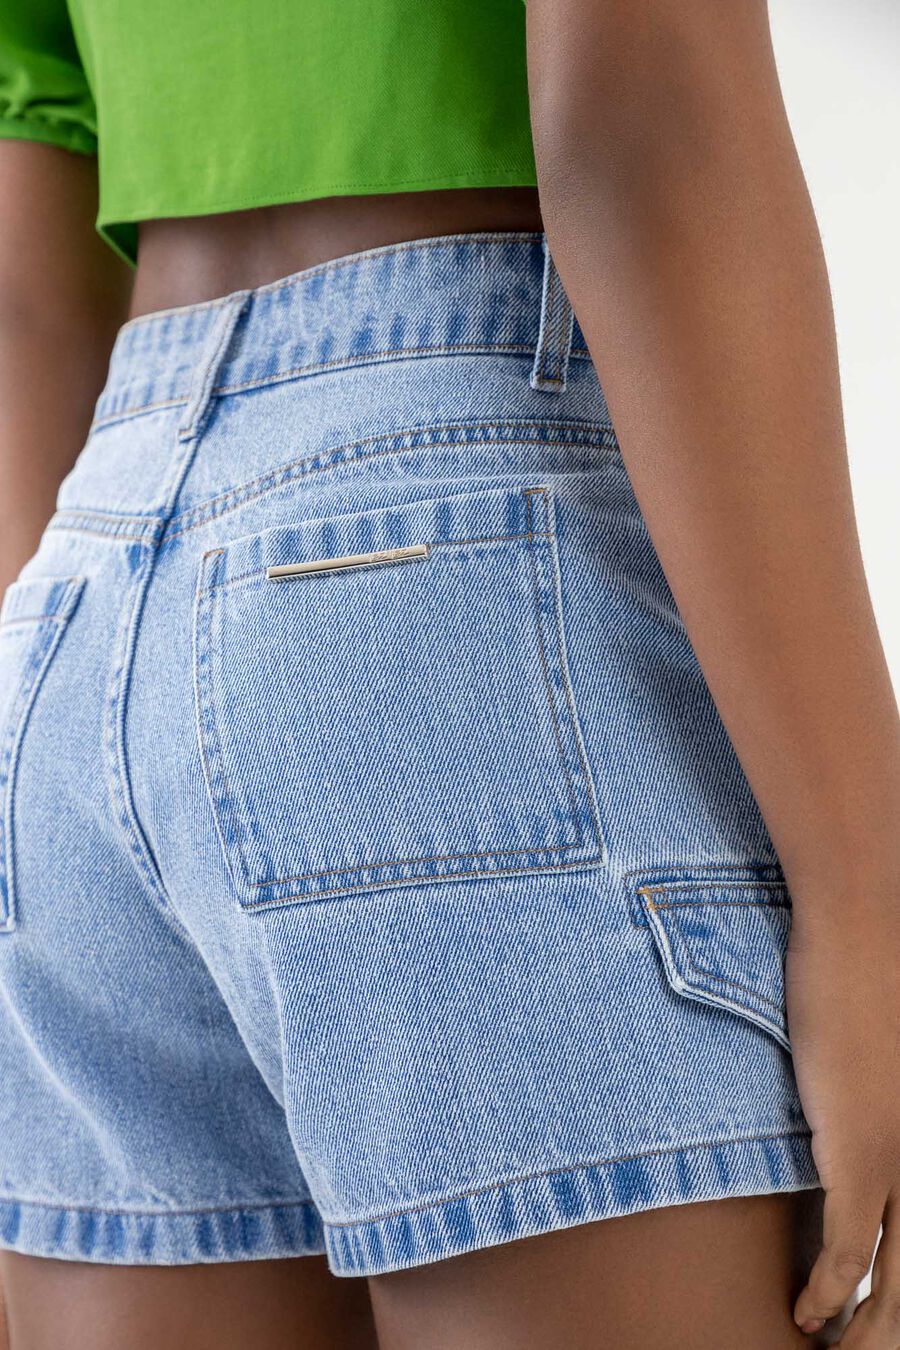 Shorts Jeans Hot Pant com Detalhe Lateral, JEANS, large.